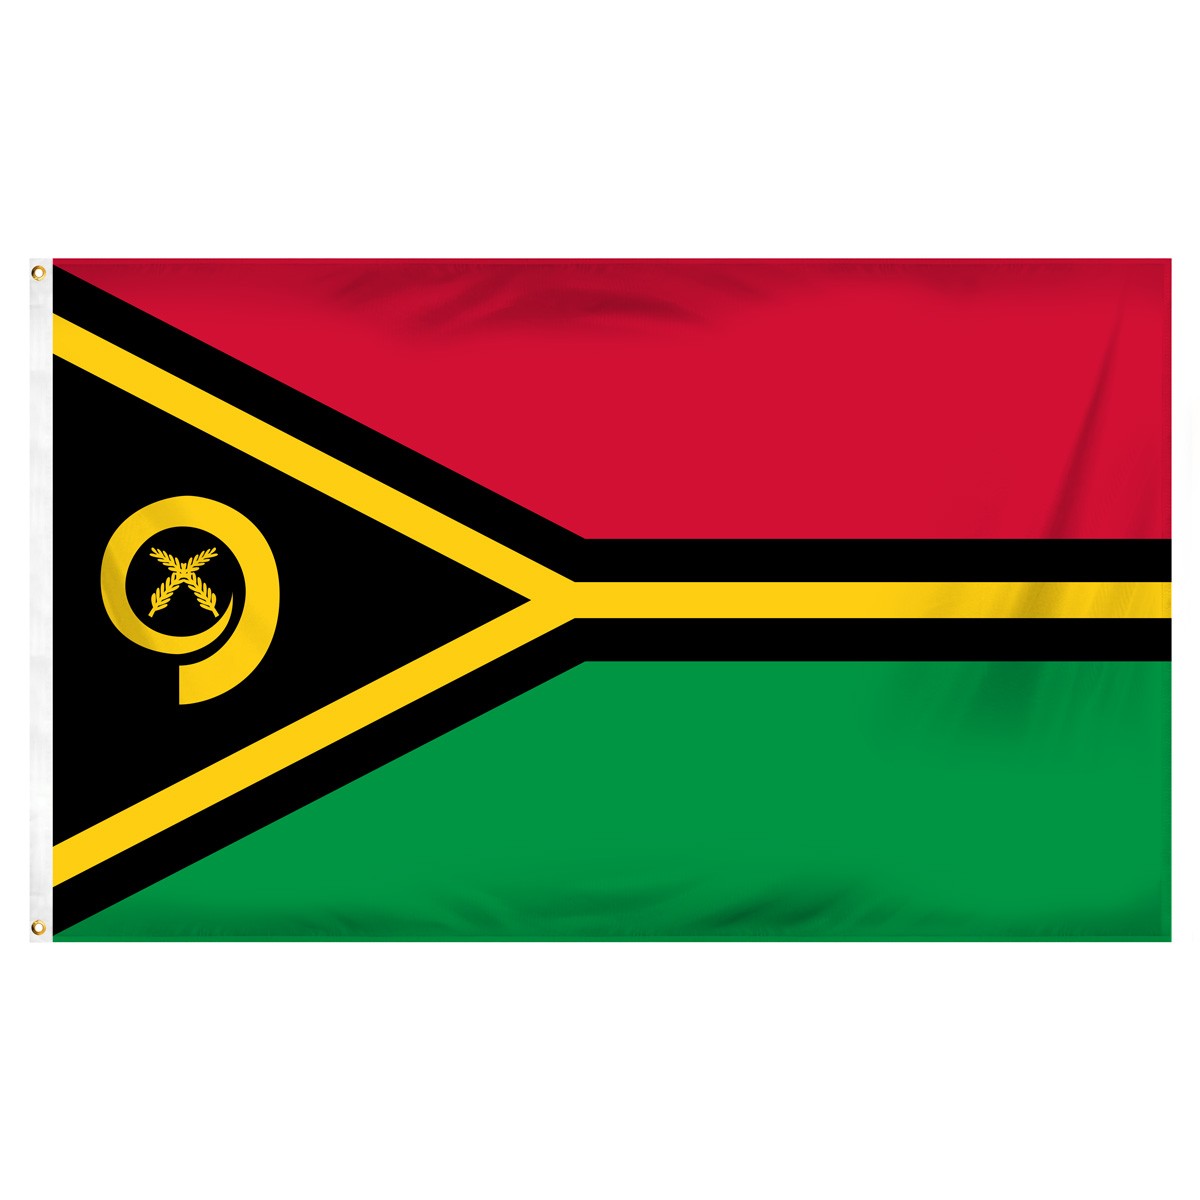 Vanuatu Flags and Pennants